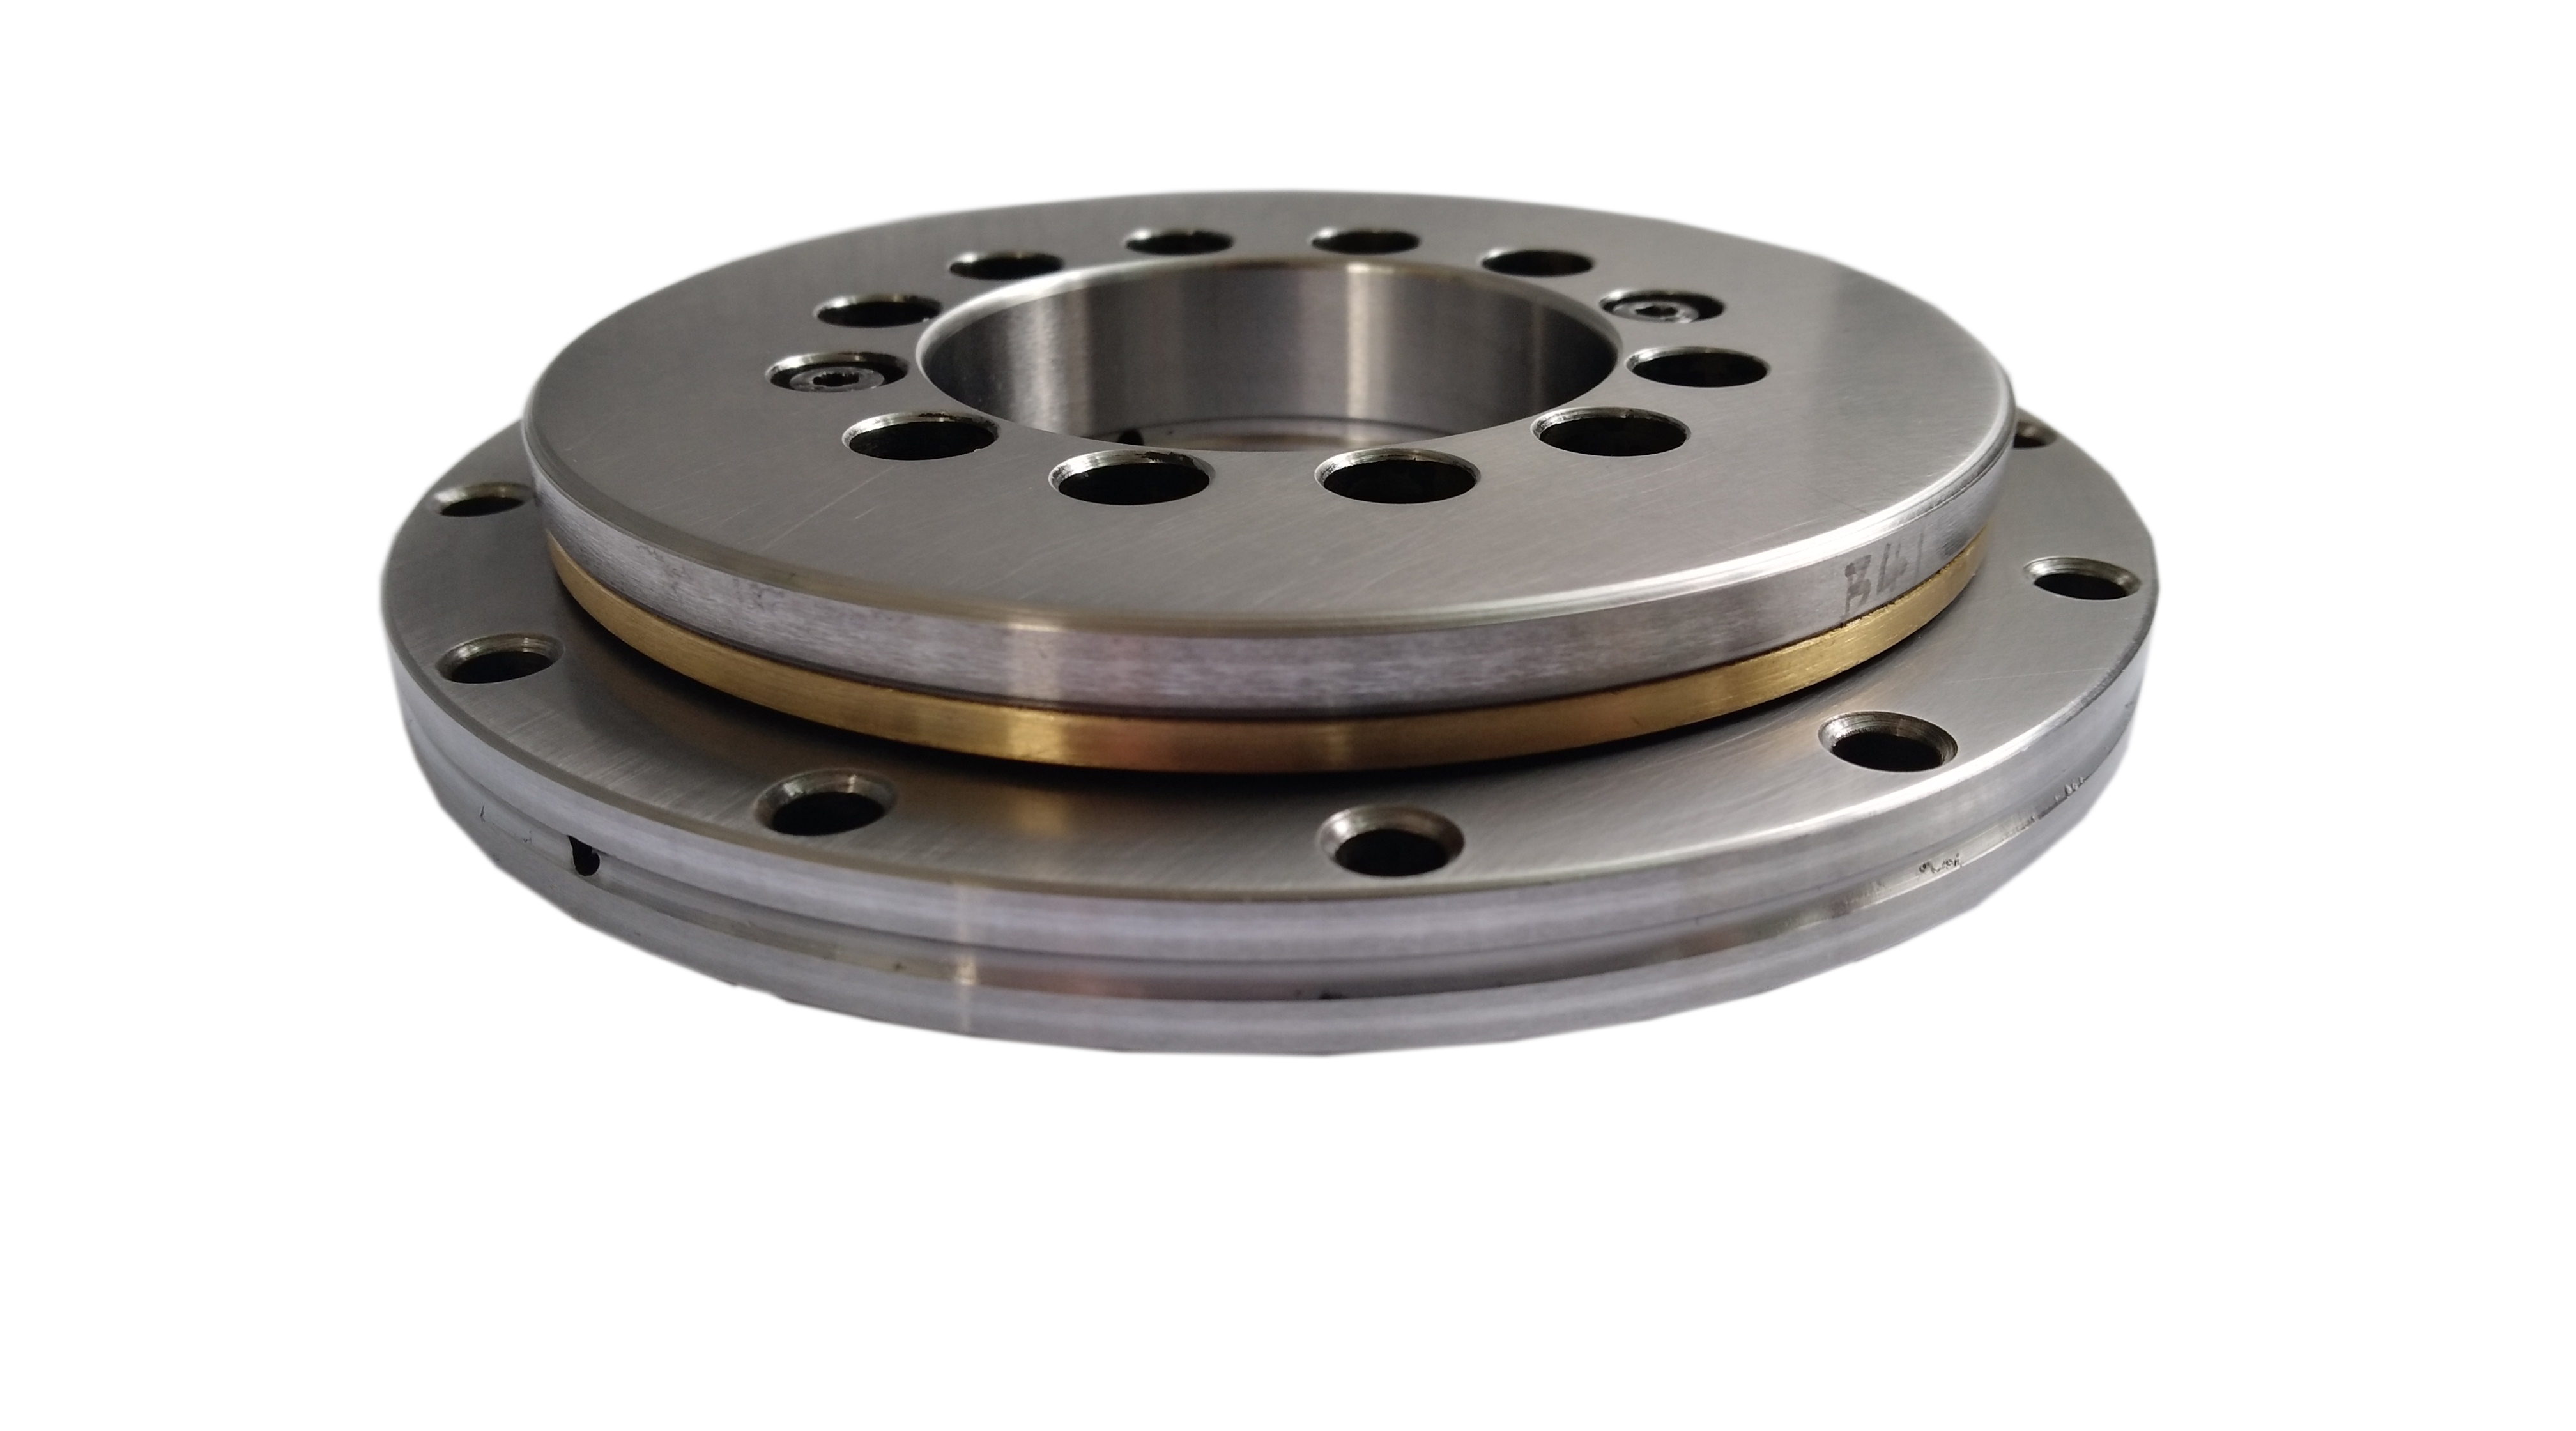 YRT120 rotary table Bearing Size 120X210X40mm,YRT120 bearing